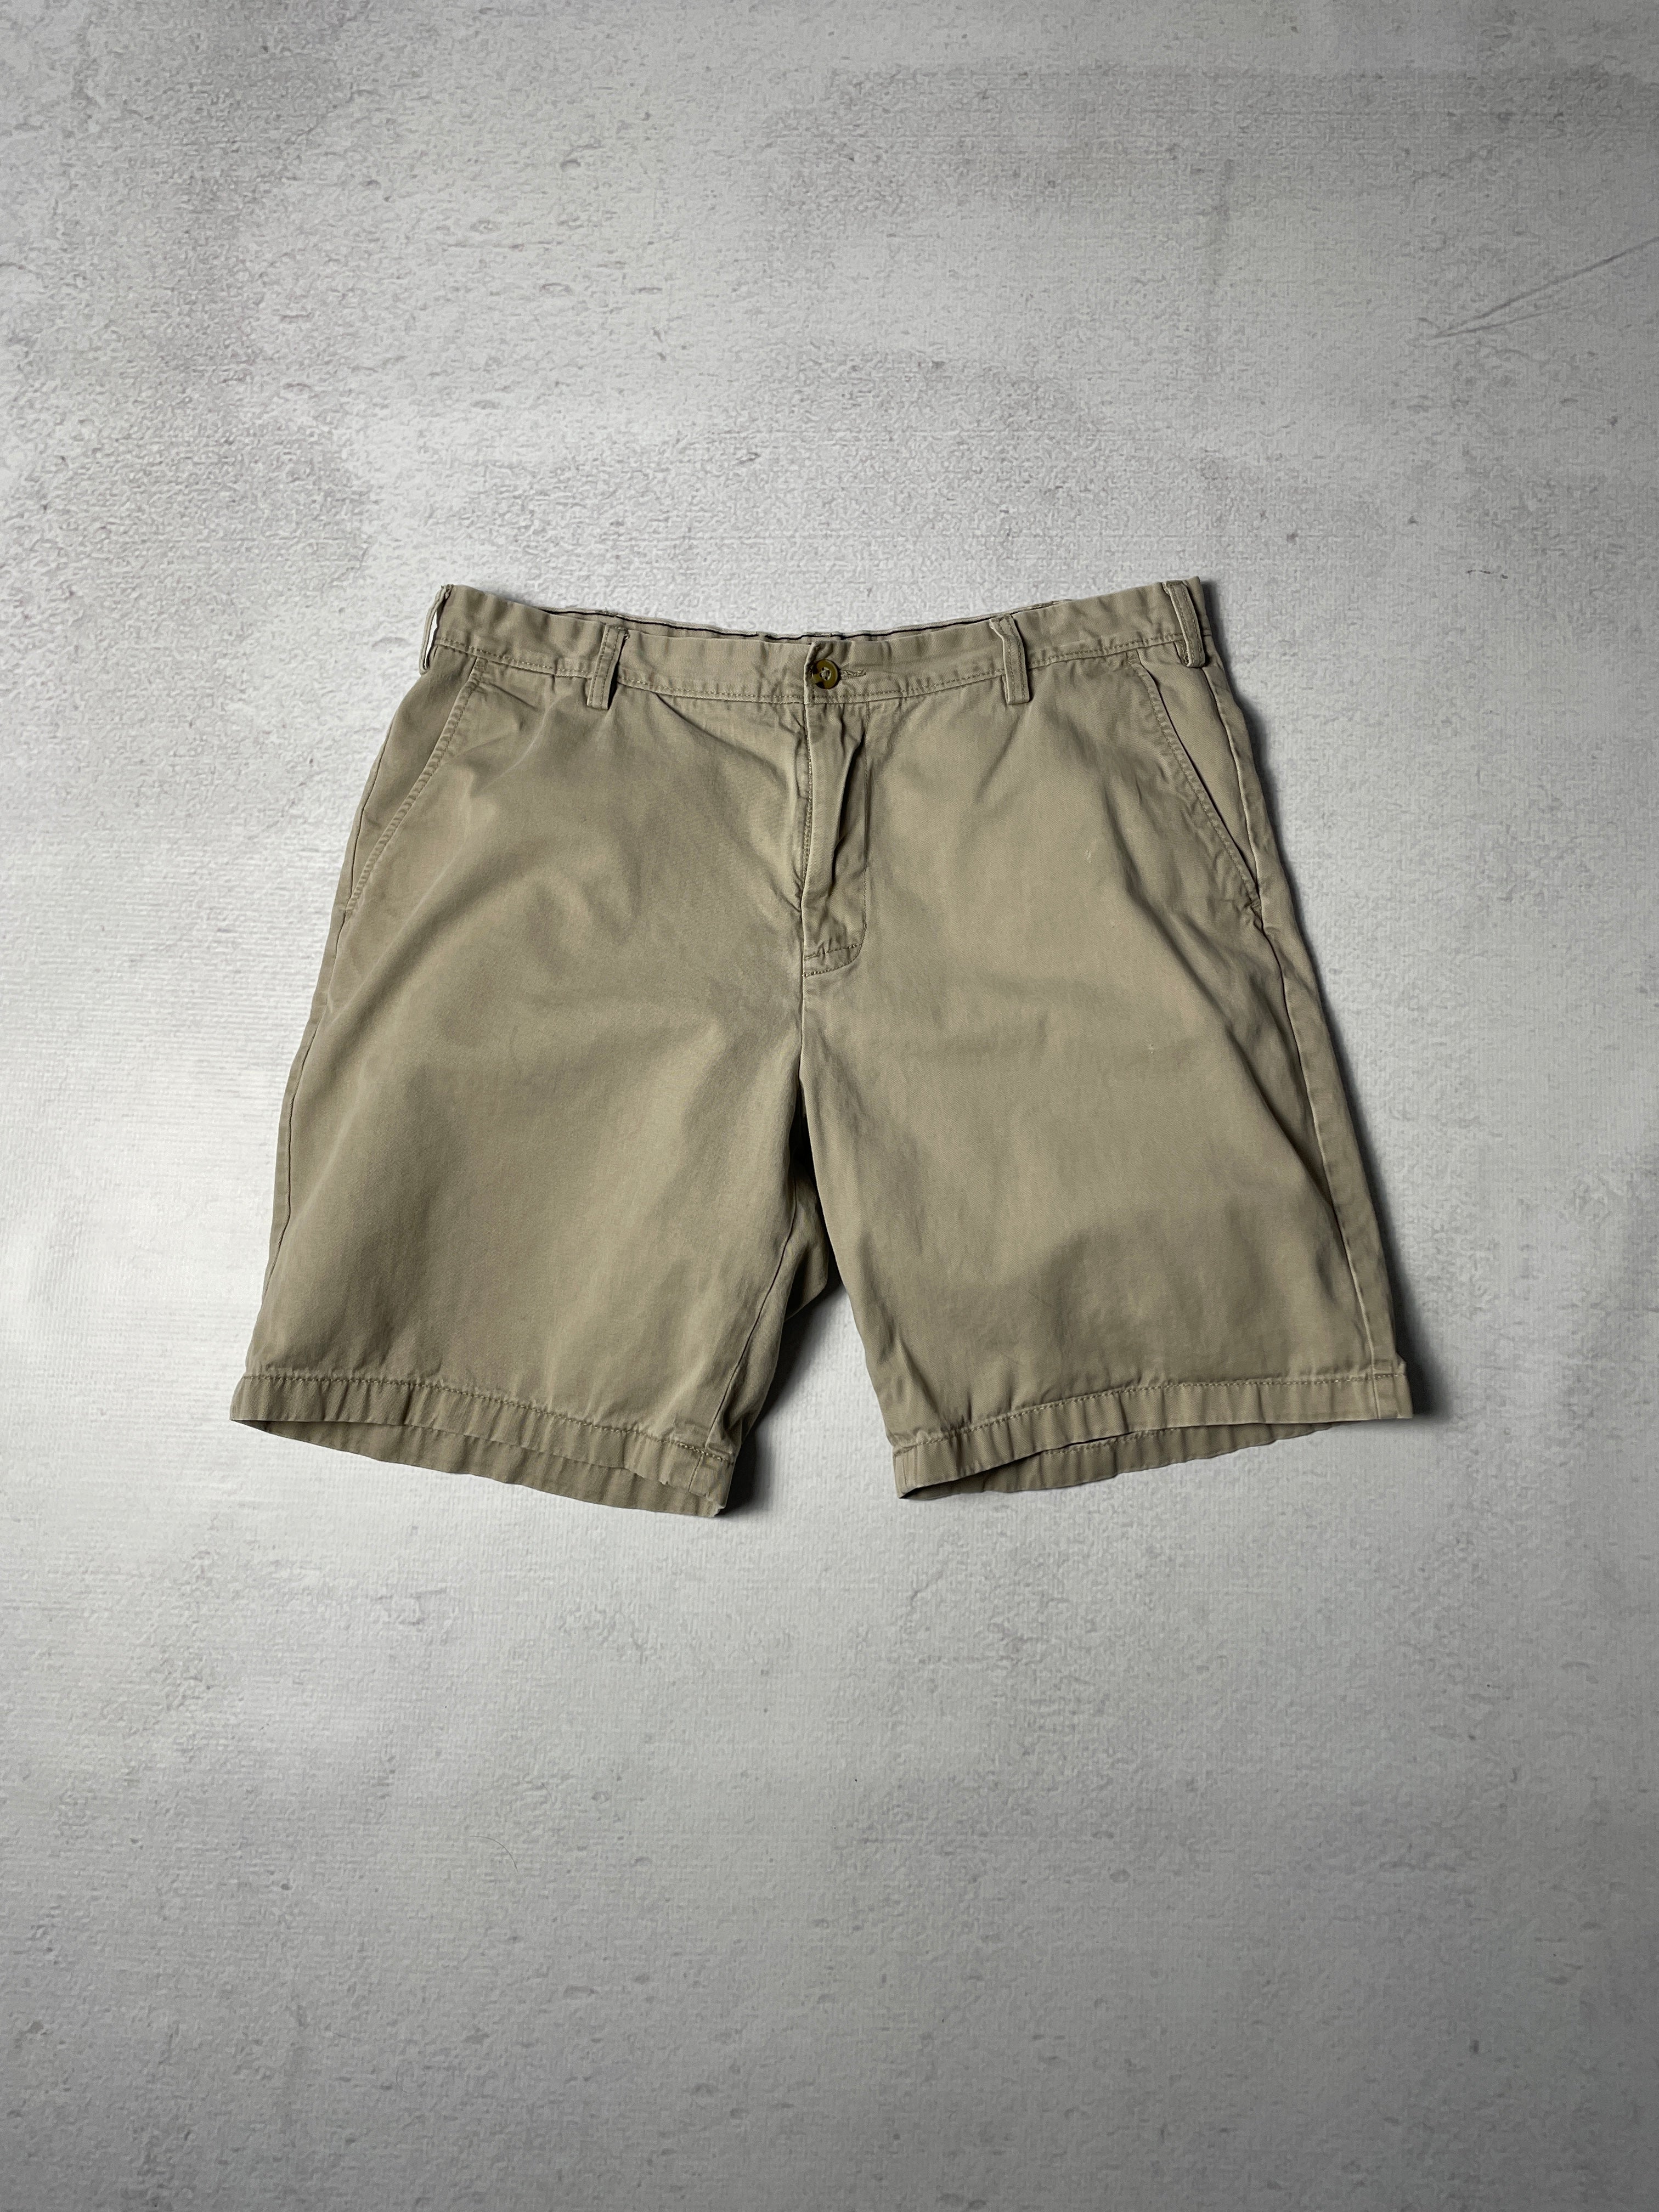 Vintage Nautica Chino Shorts - Men's 38W